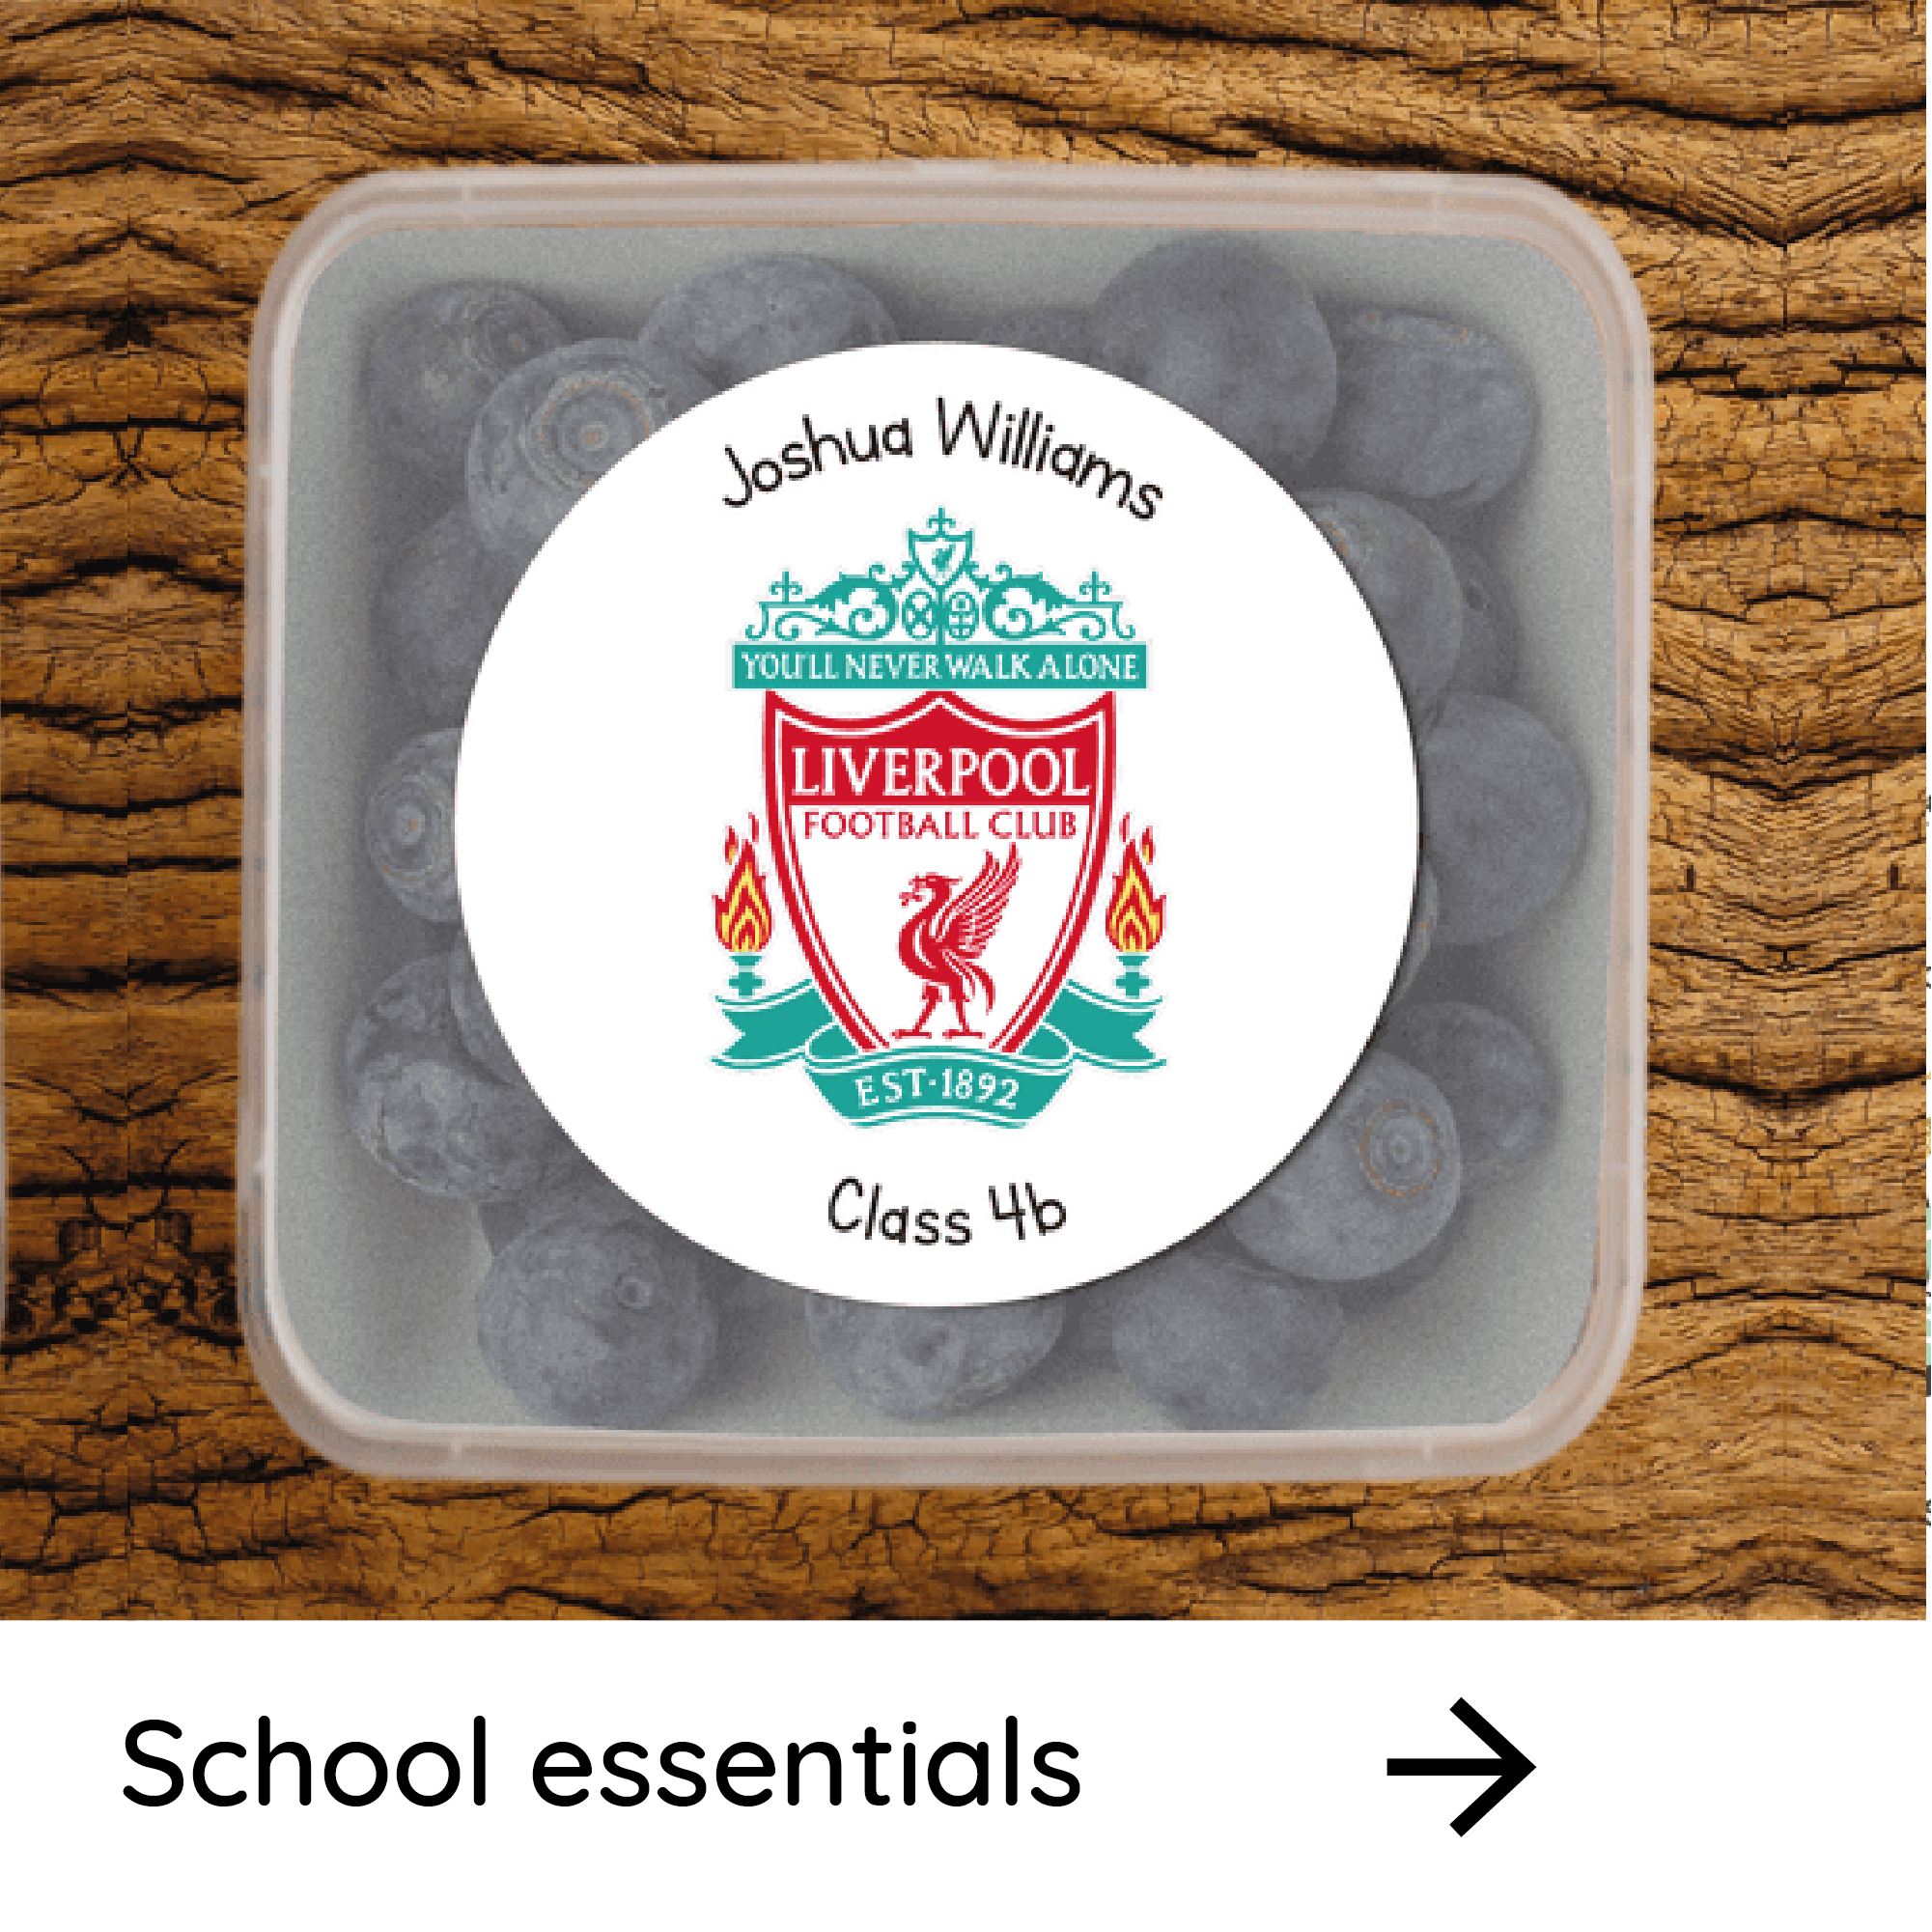 School Essentials